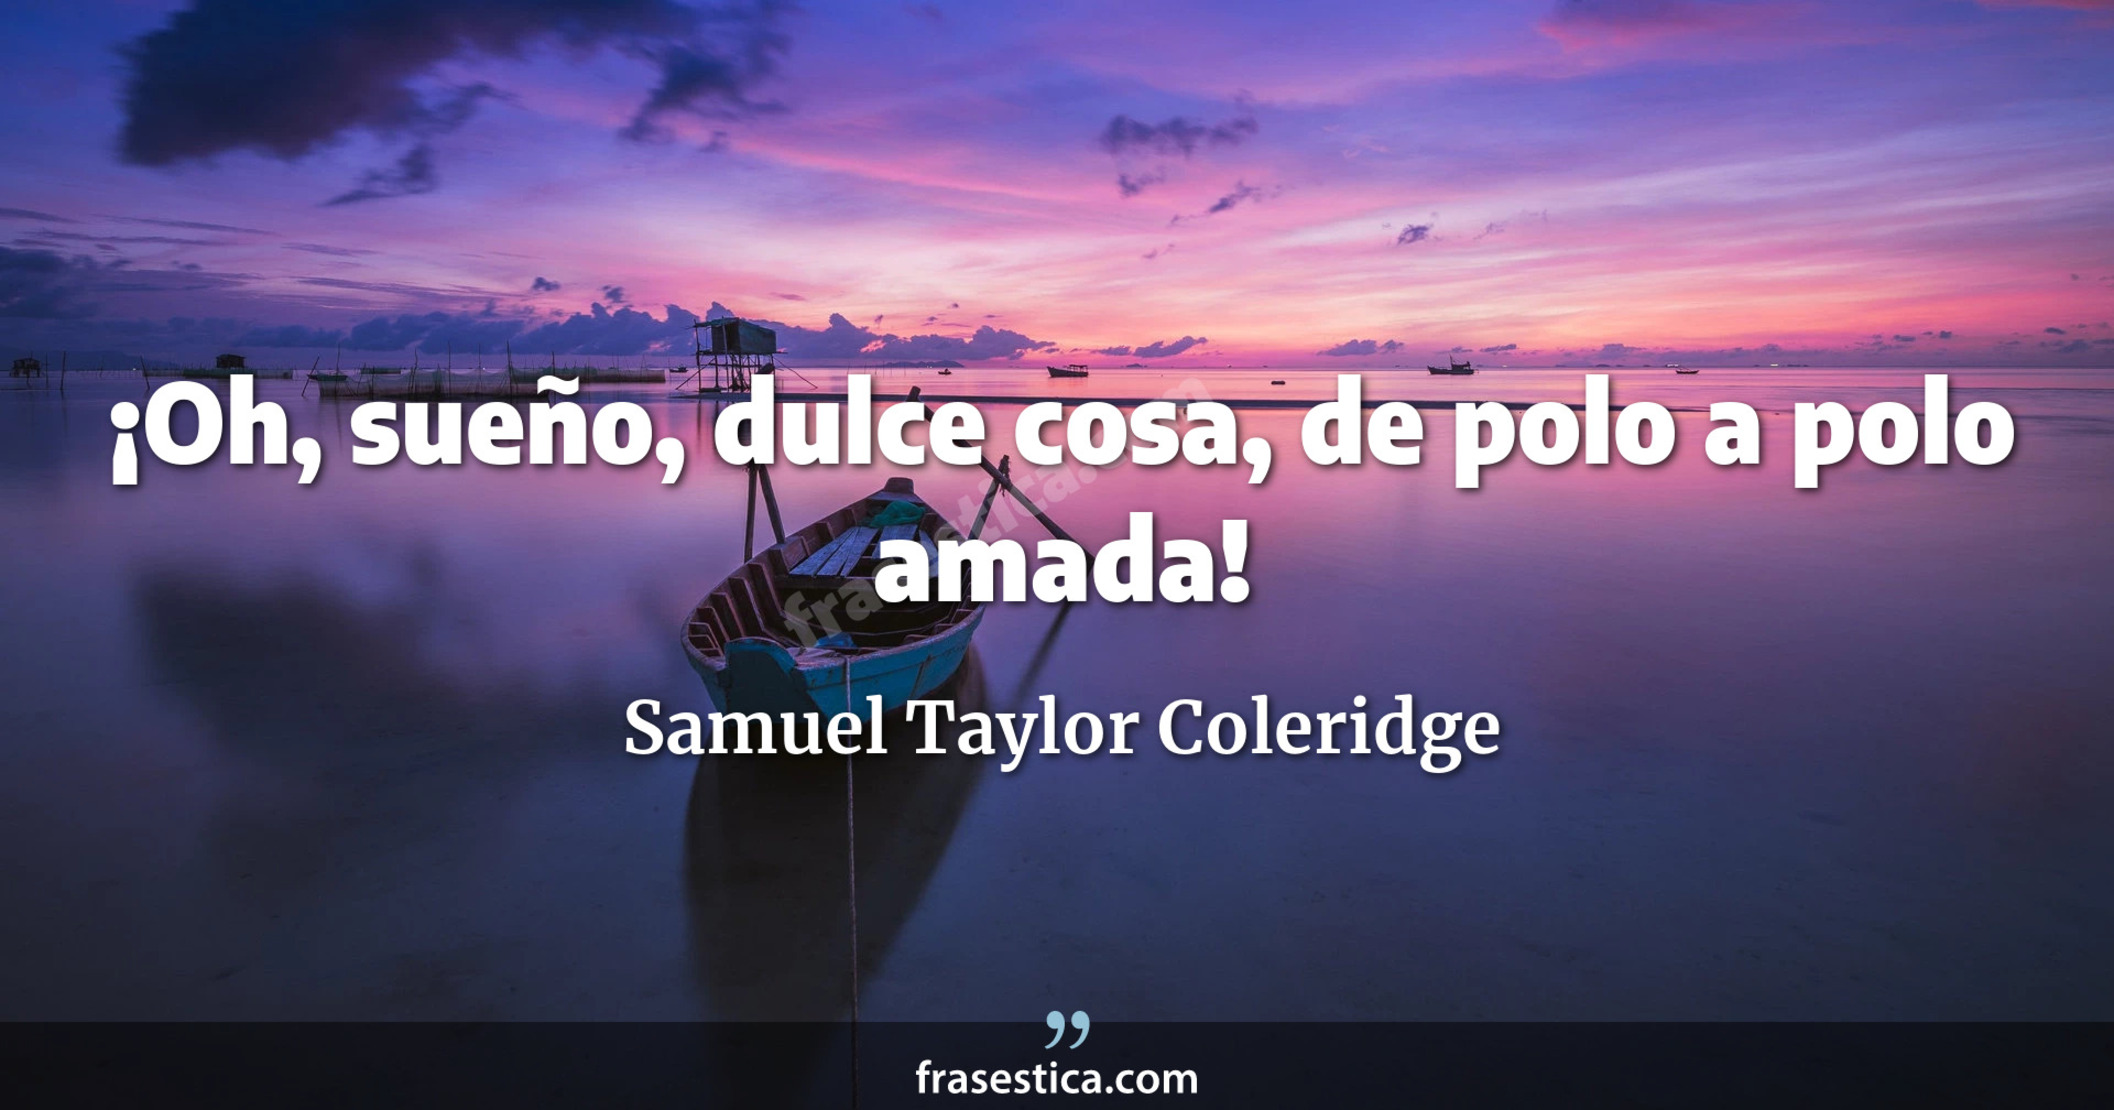 ¡Oh, sueño, dulce cosa, de polo a polo amada! - Samuel Taylor Coleridge